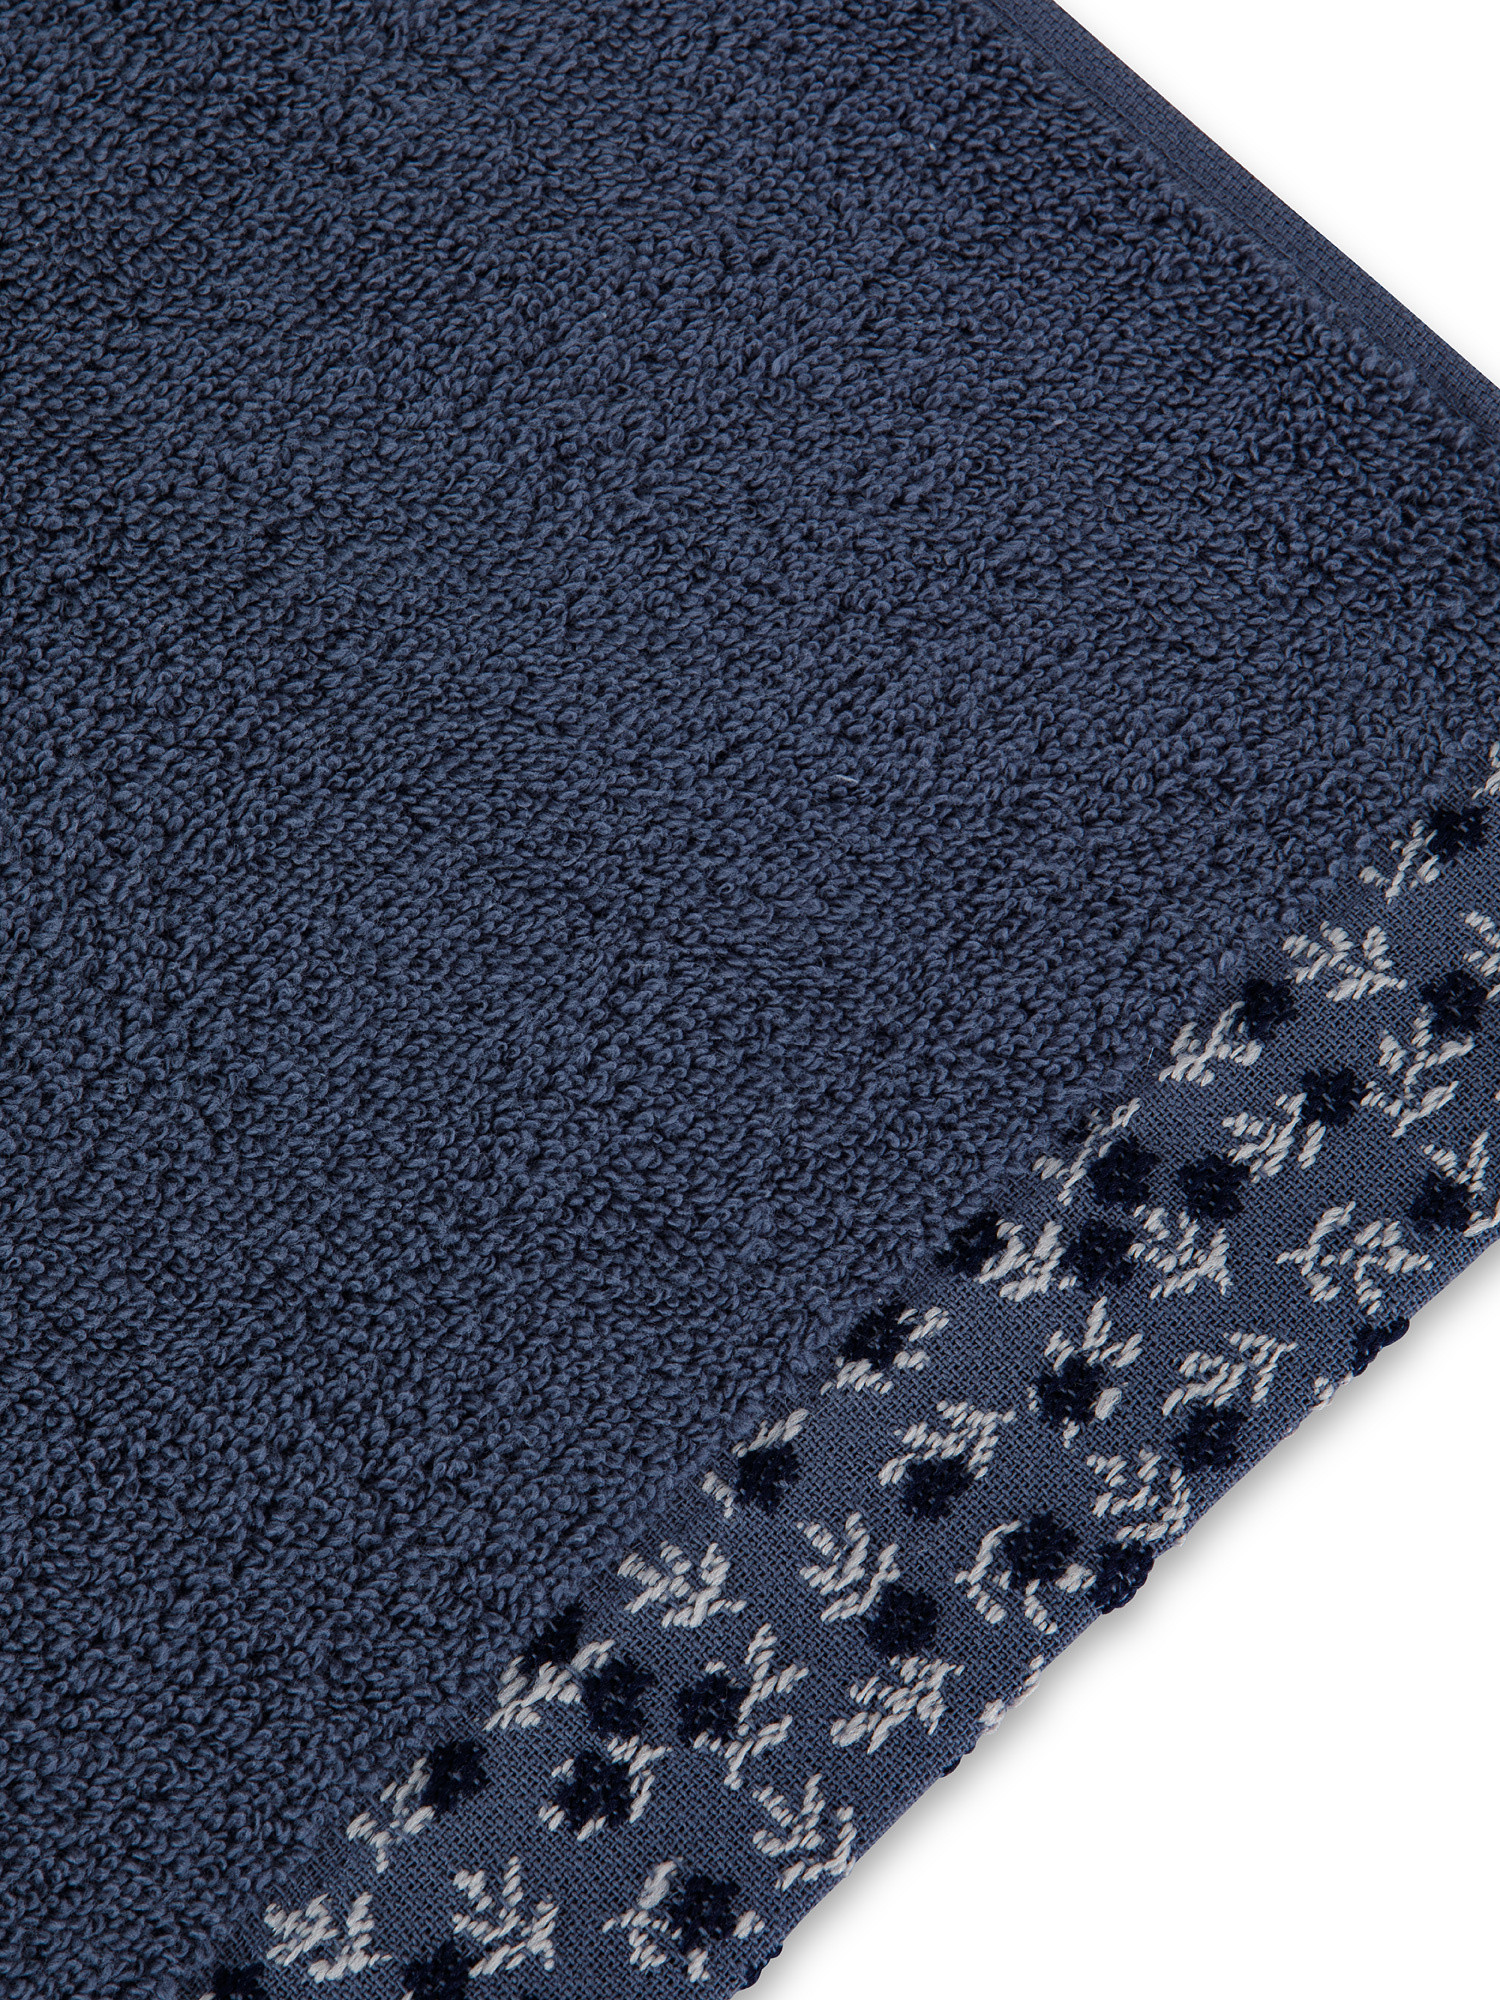 Asciugamano spugna di cotone bordo floreale, Grigio, large image number 2